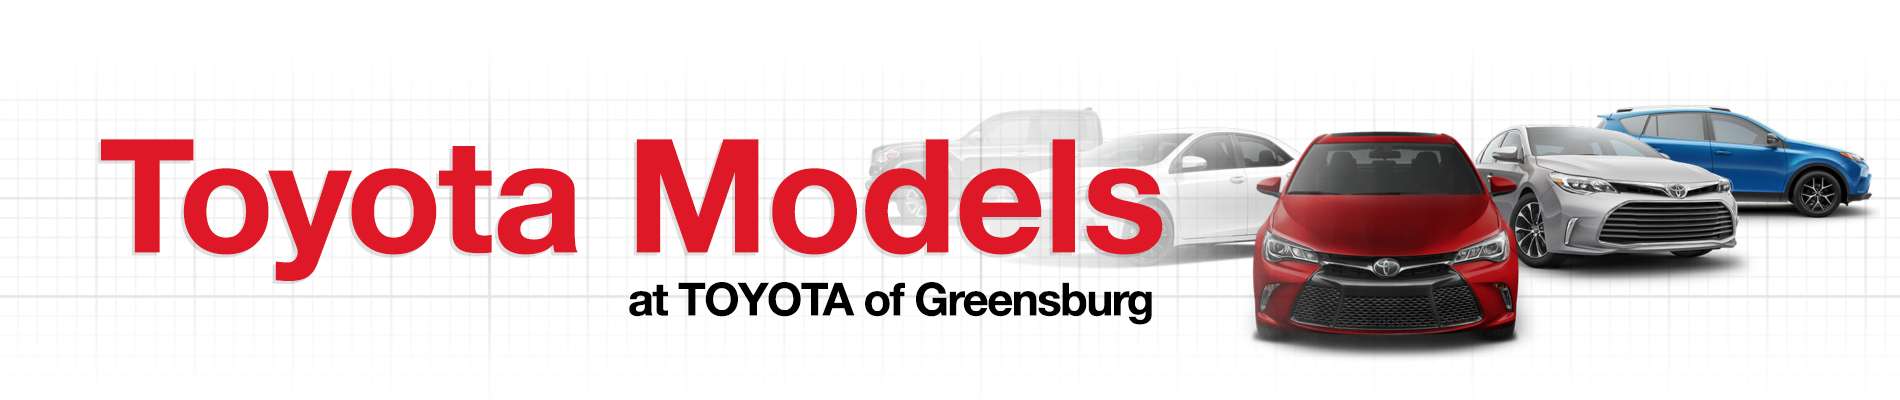 Toyota of Greensburg Models